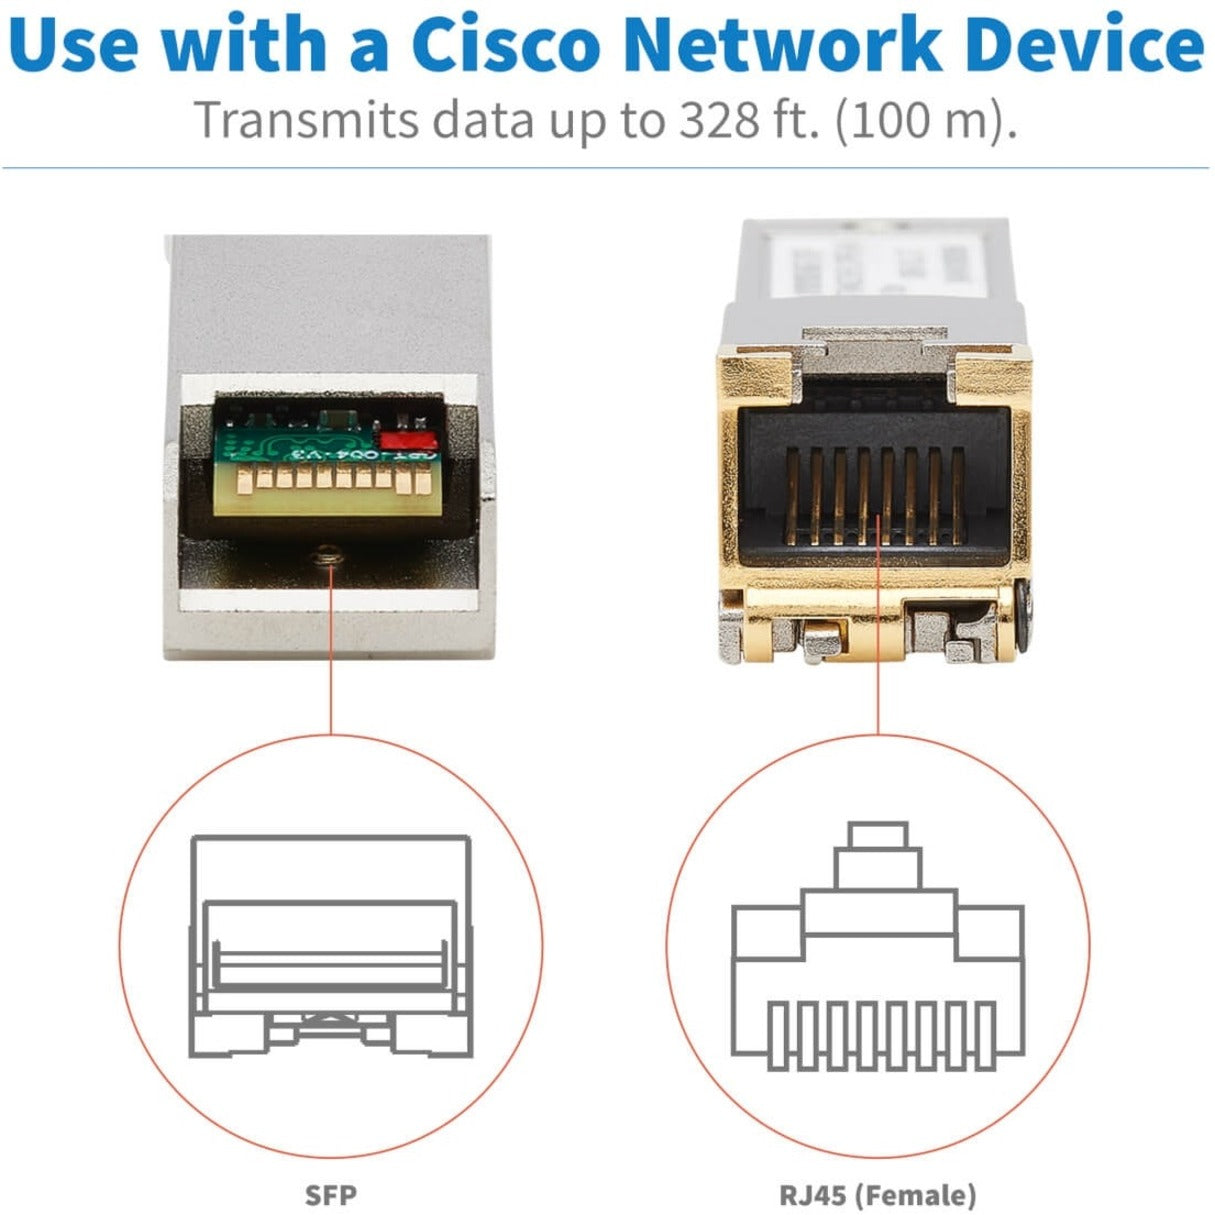 Tripp Lite N286-01GLC-TE Module SFP Cisco (mini-GBIC) 1000Base-TX Ethernet Gigabit Paire torsadée Hot-swappable